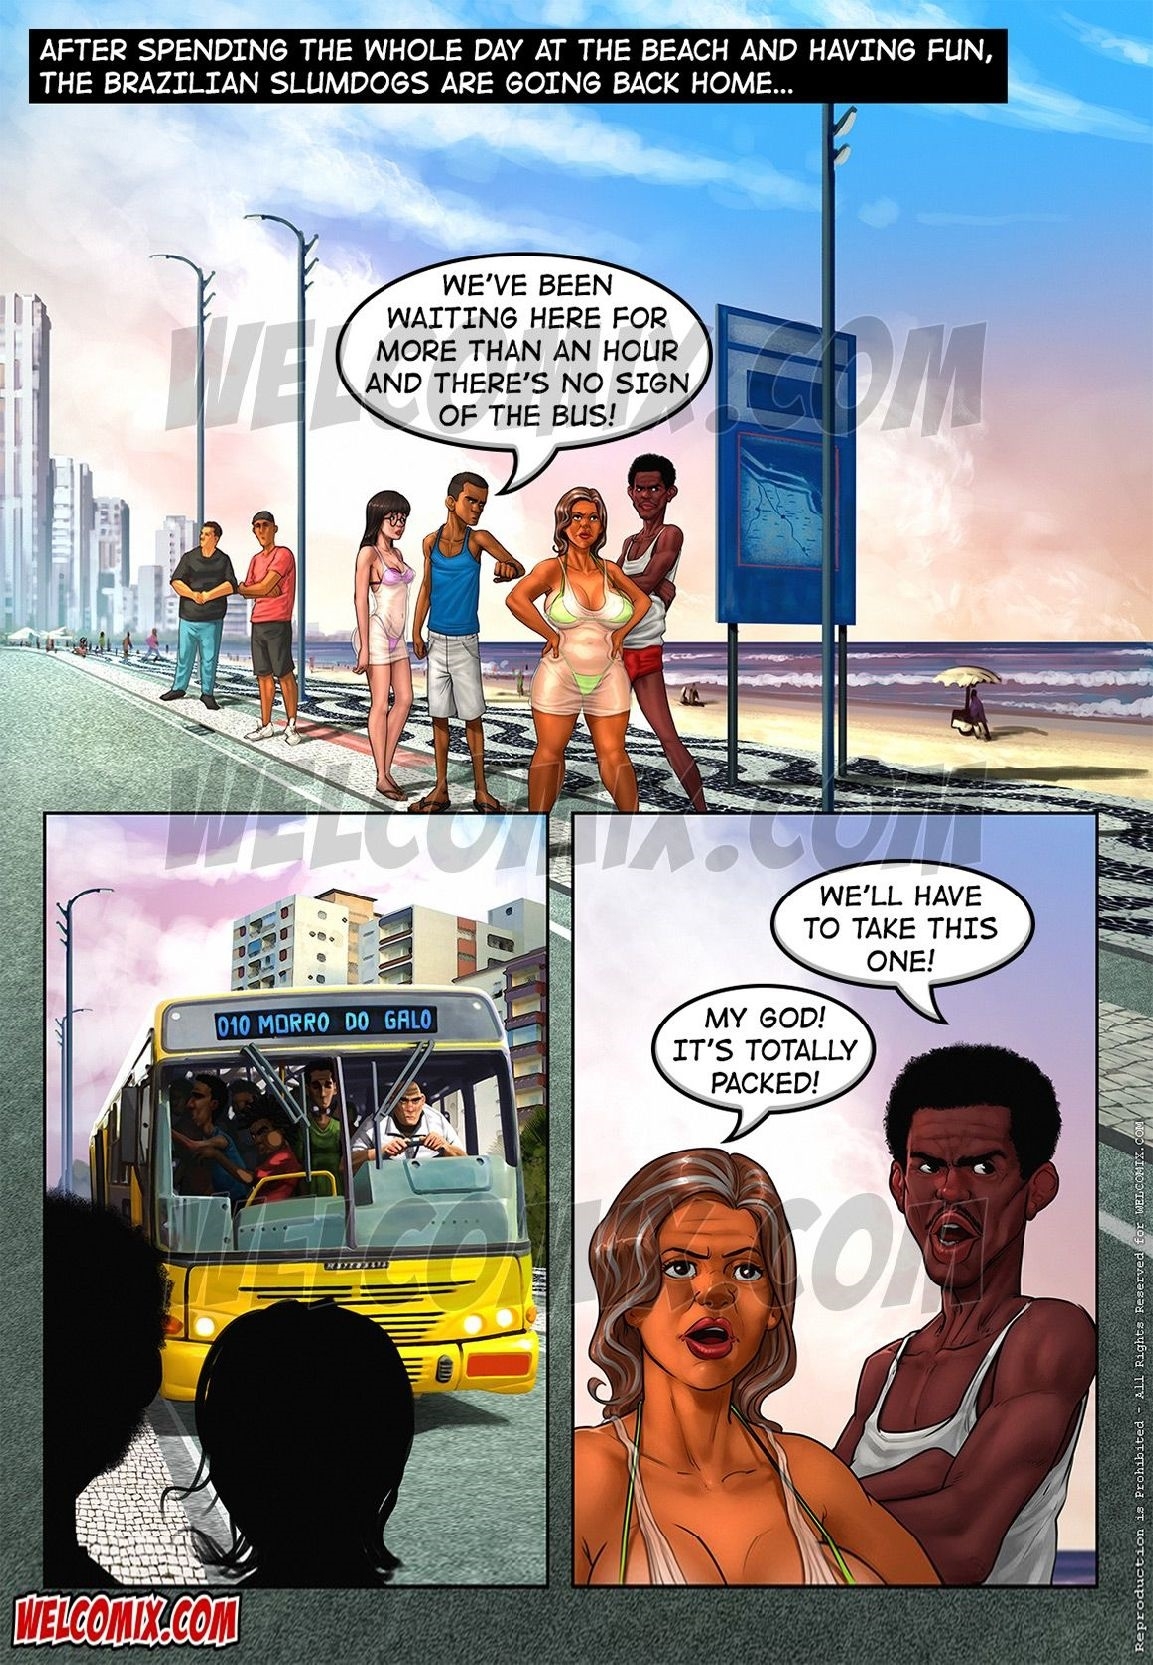 Brazilian Slumdogs [WC | TF] - 6 Crowded Bus - english 1